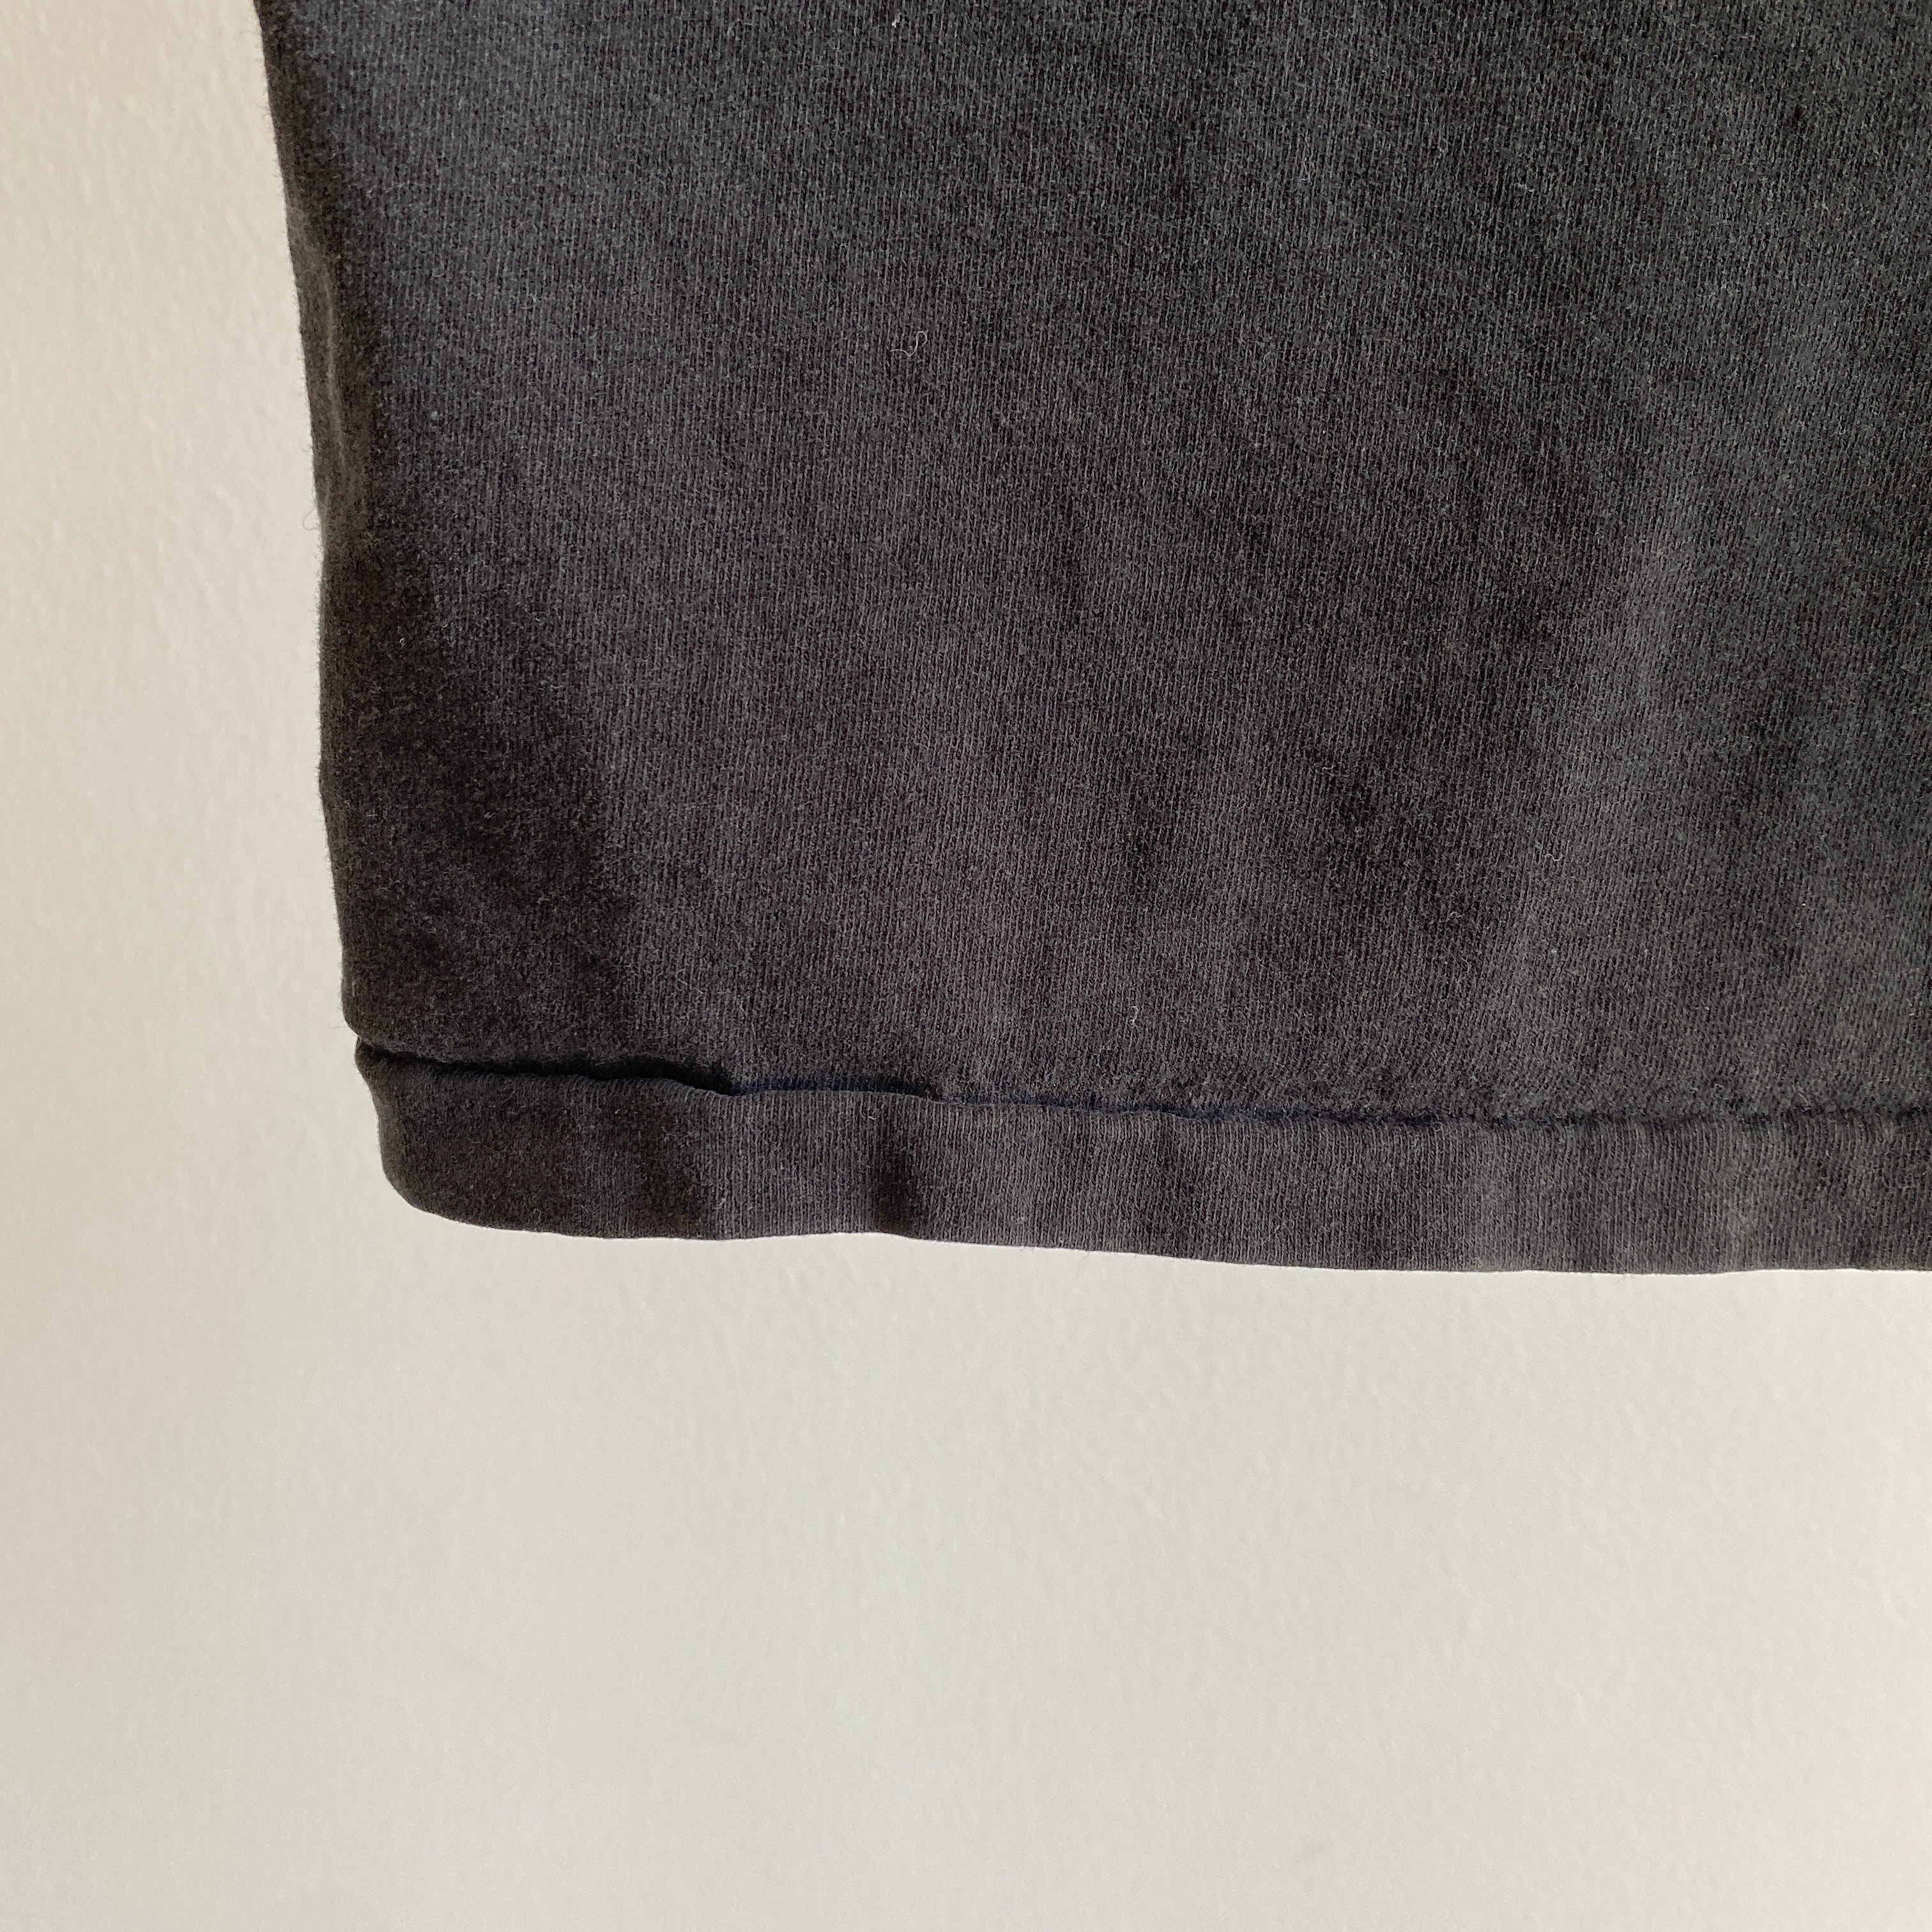 1990s Blank Black Hanes Cotton T-Shirt